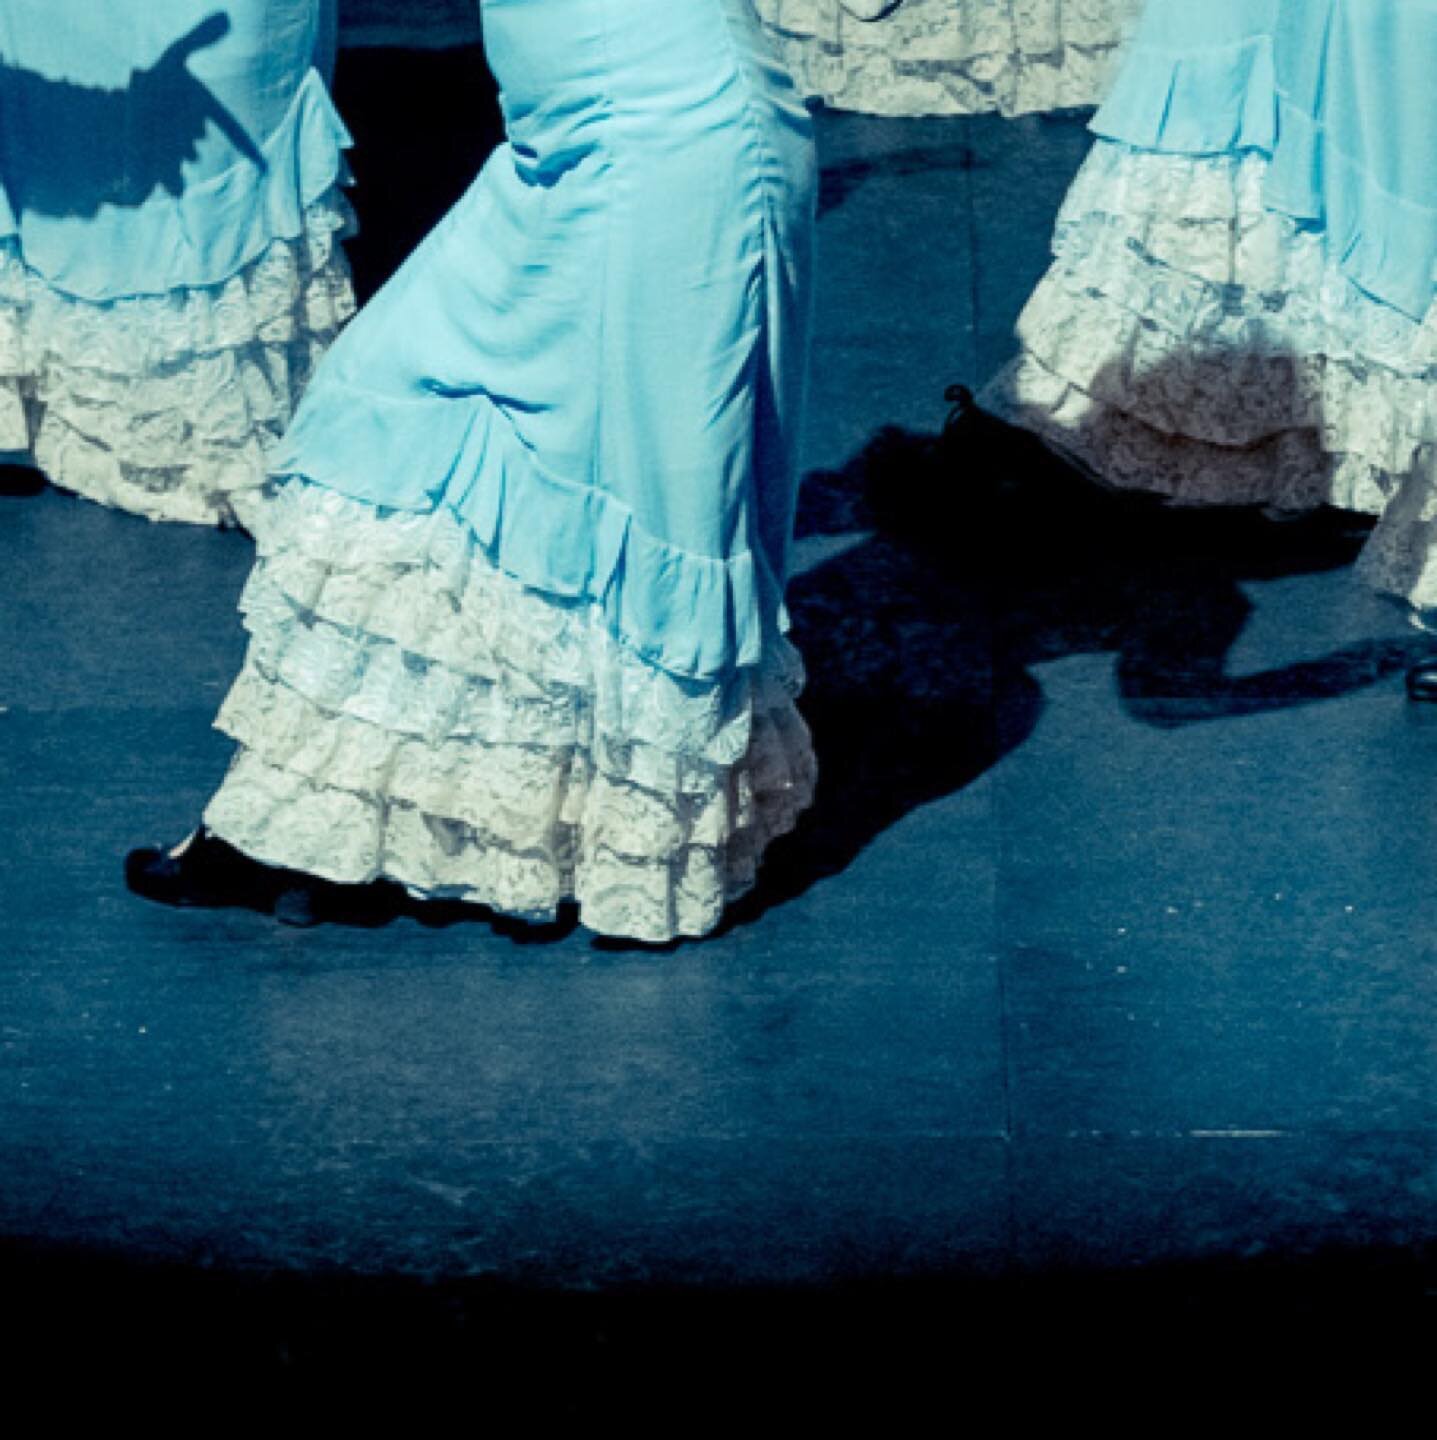 The American mirage and its welcoming sweetness #guajiras 

#flamenco #flamencas #dancers #dancerlife #flamencodancer #community #arts #culture #ole #dowhatyoulove #dance #performingarts #sydney #sydneyflamenco #nswarts #ole #humansofflamenco #austra